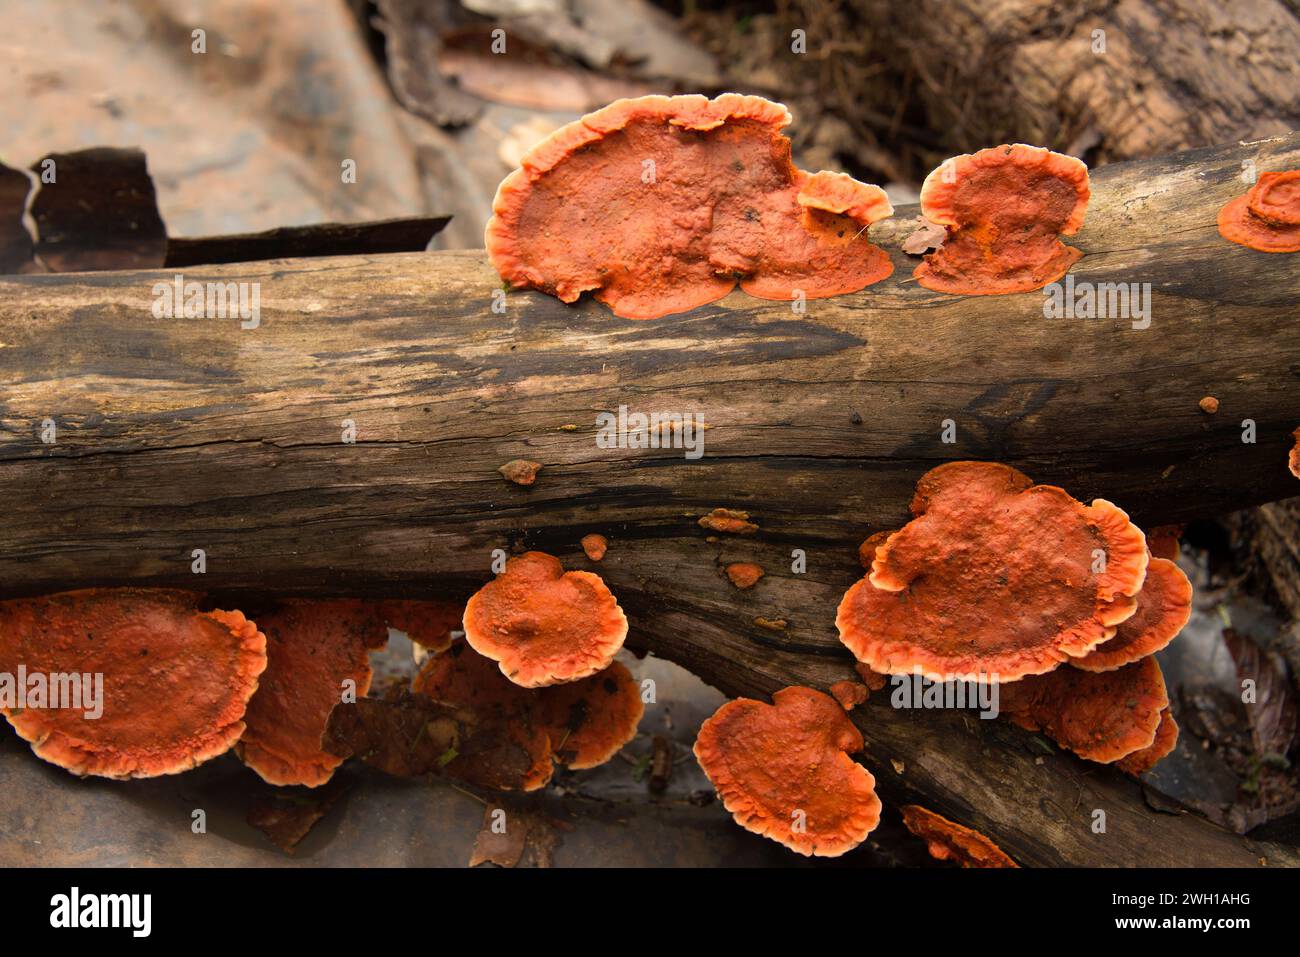 Cinnabar polypore (Pycnoporus sanguineus or Polyporus sanguineus) is a medicinal saprophytic fungus. This photo was taken in Iguazu, Argentina. Stock Photo